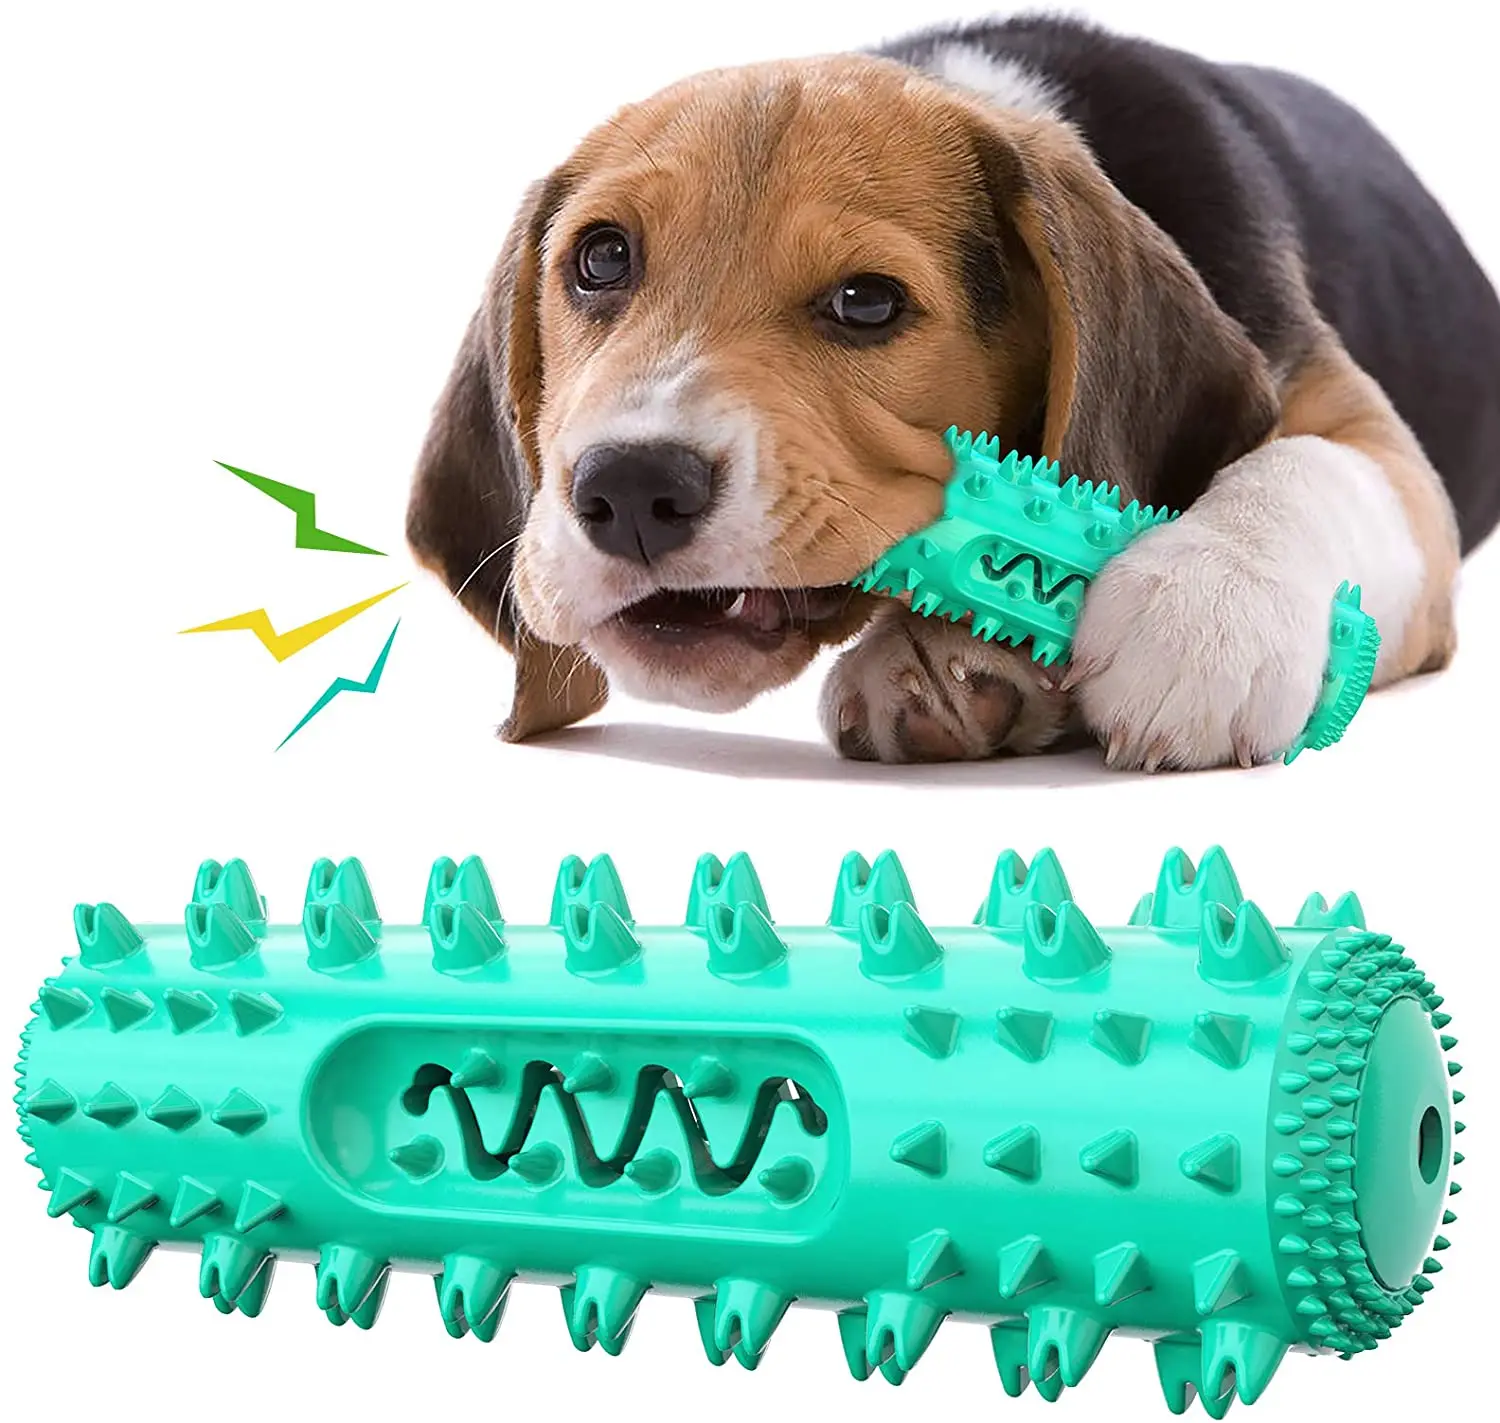 

Amazon Top Seller Similar Bone Ultra Durable Non-Toxic Pet Toothbrush Toys Aggressive feeder rubber Dog Chew Toy, Blue, green, orange, yellow, brown